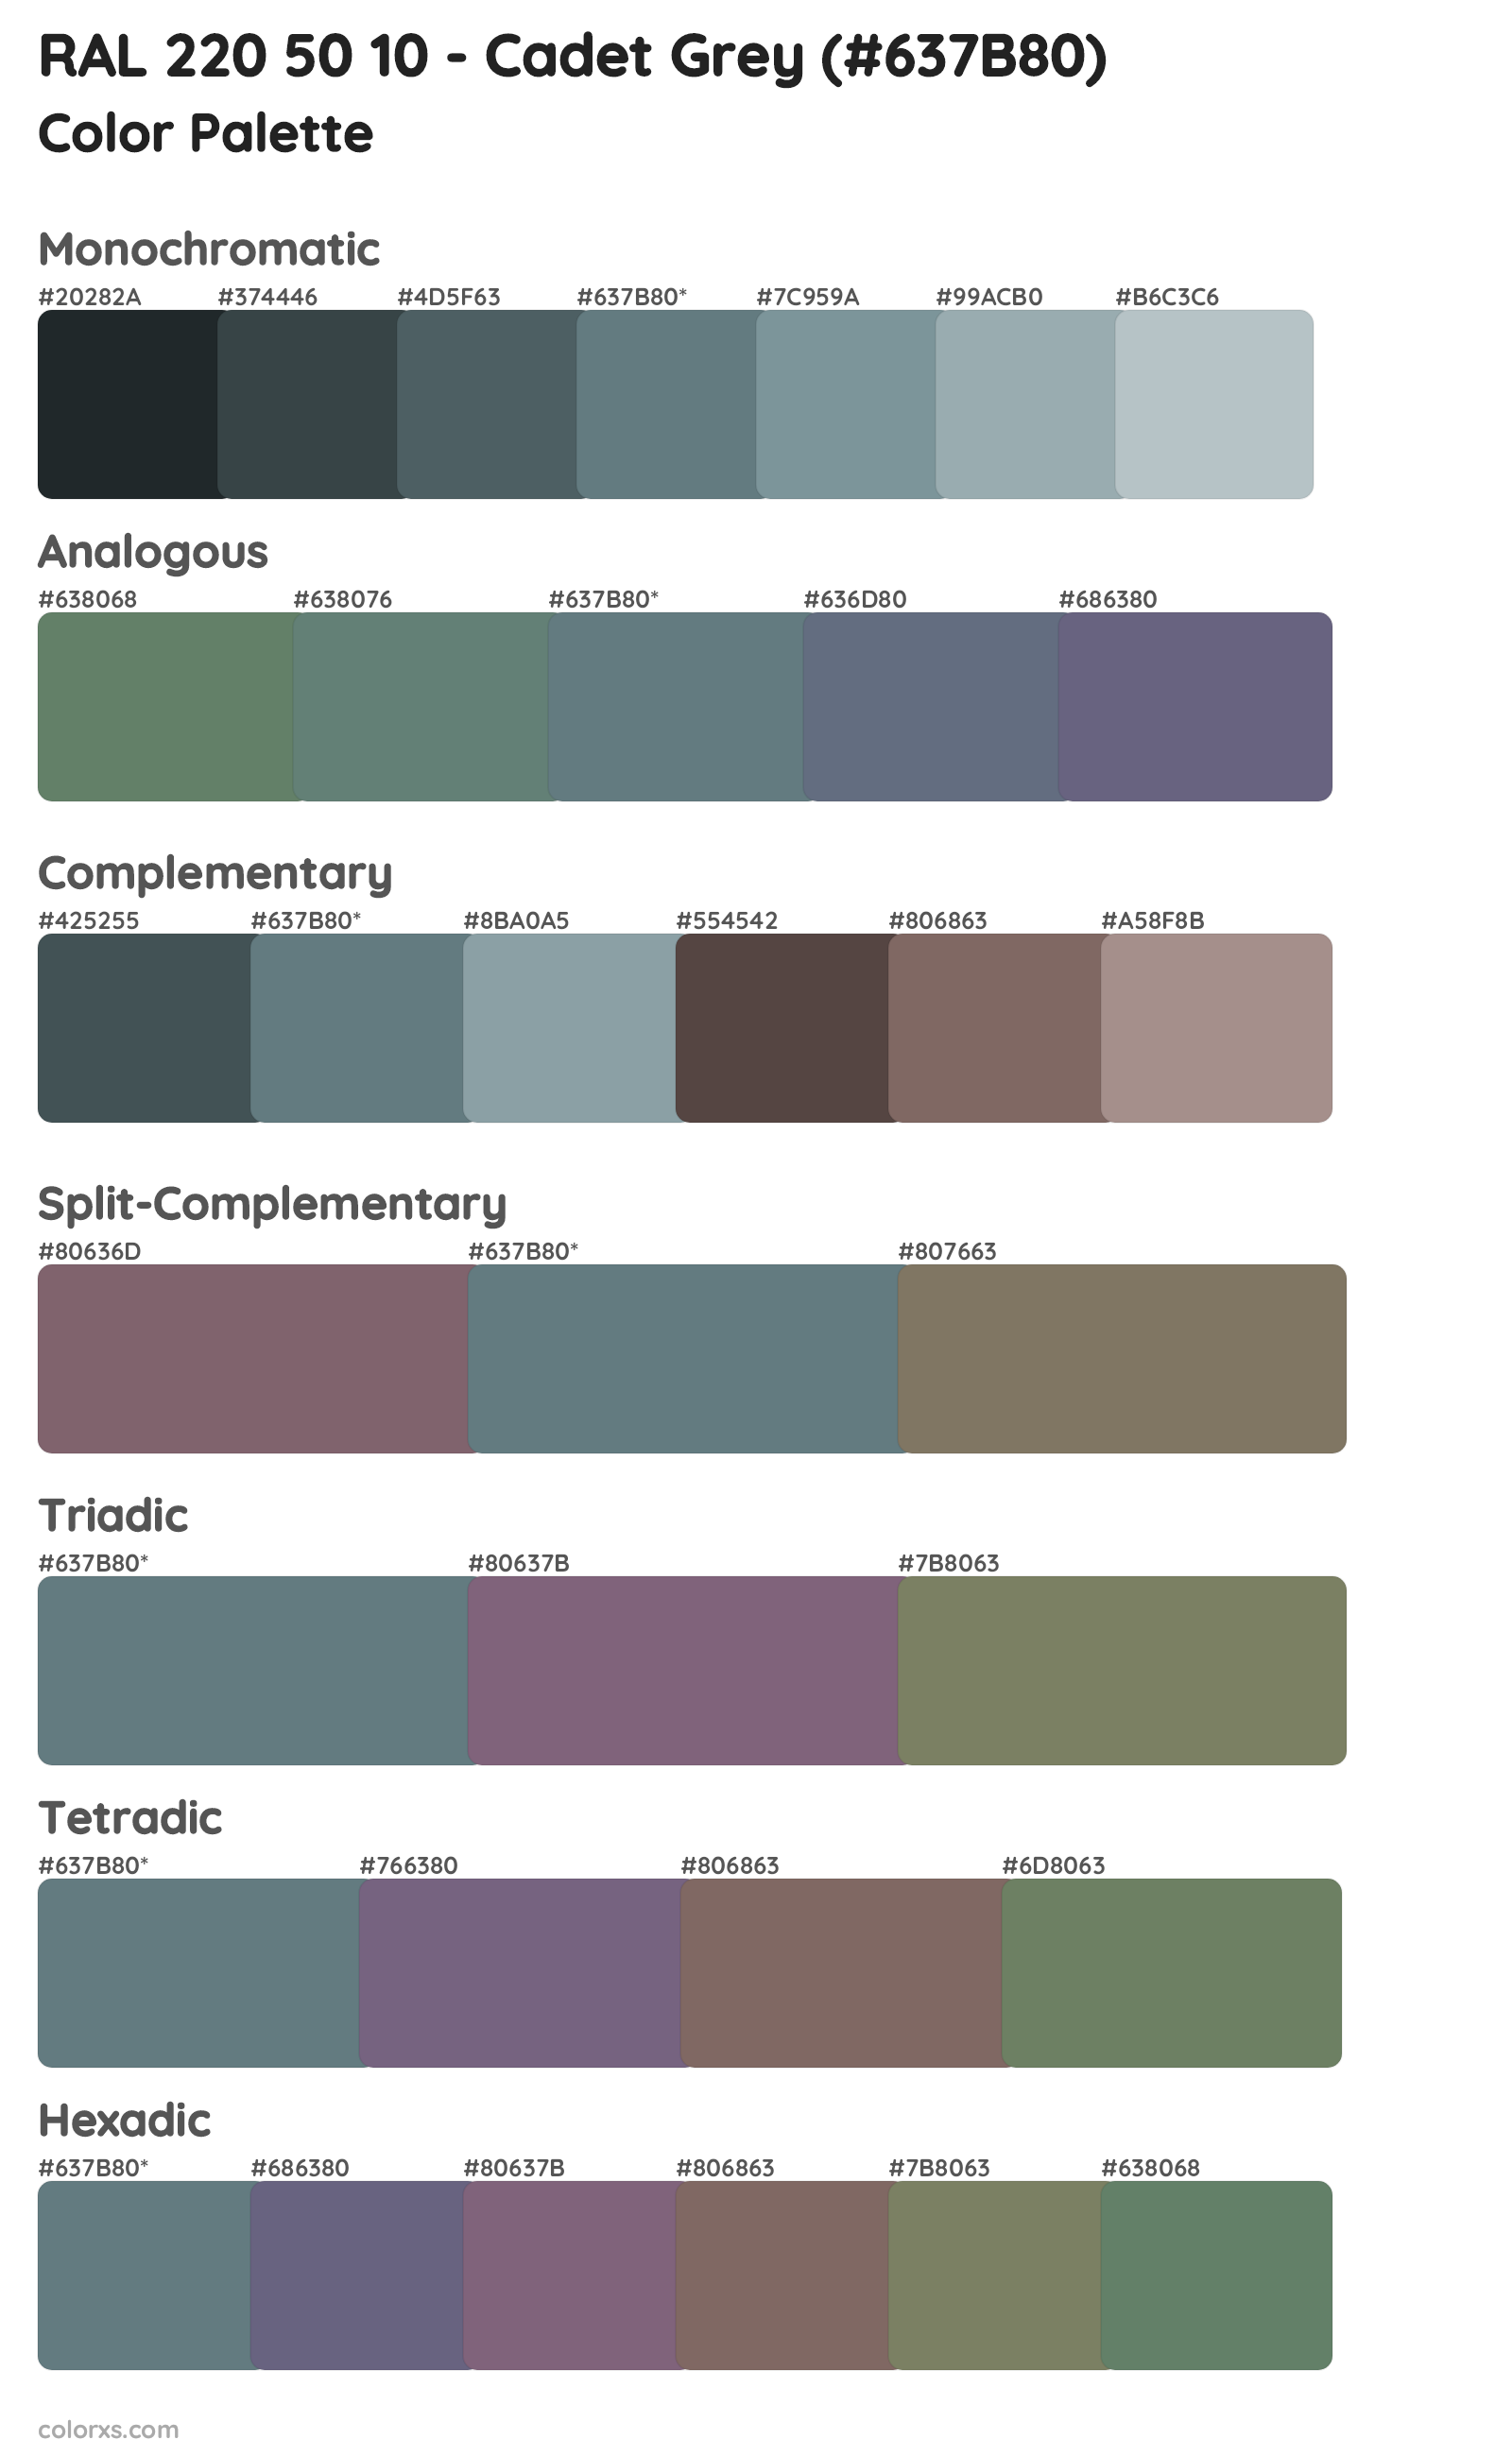 RAL 220 50 10 - Cadet Grey Color Scheme Palettes